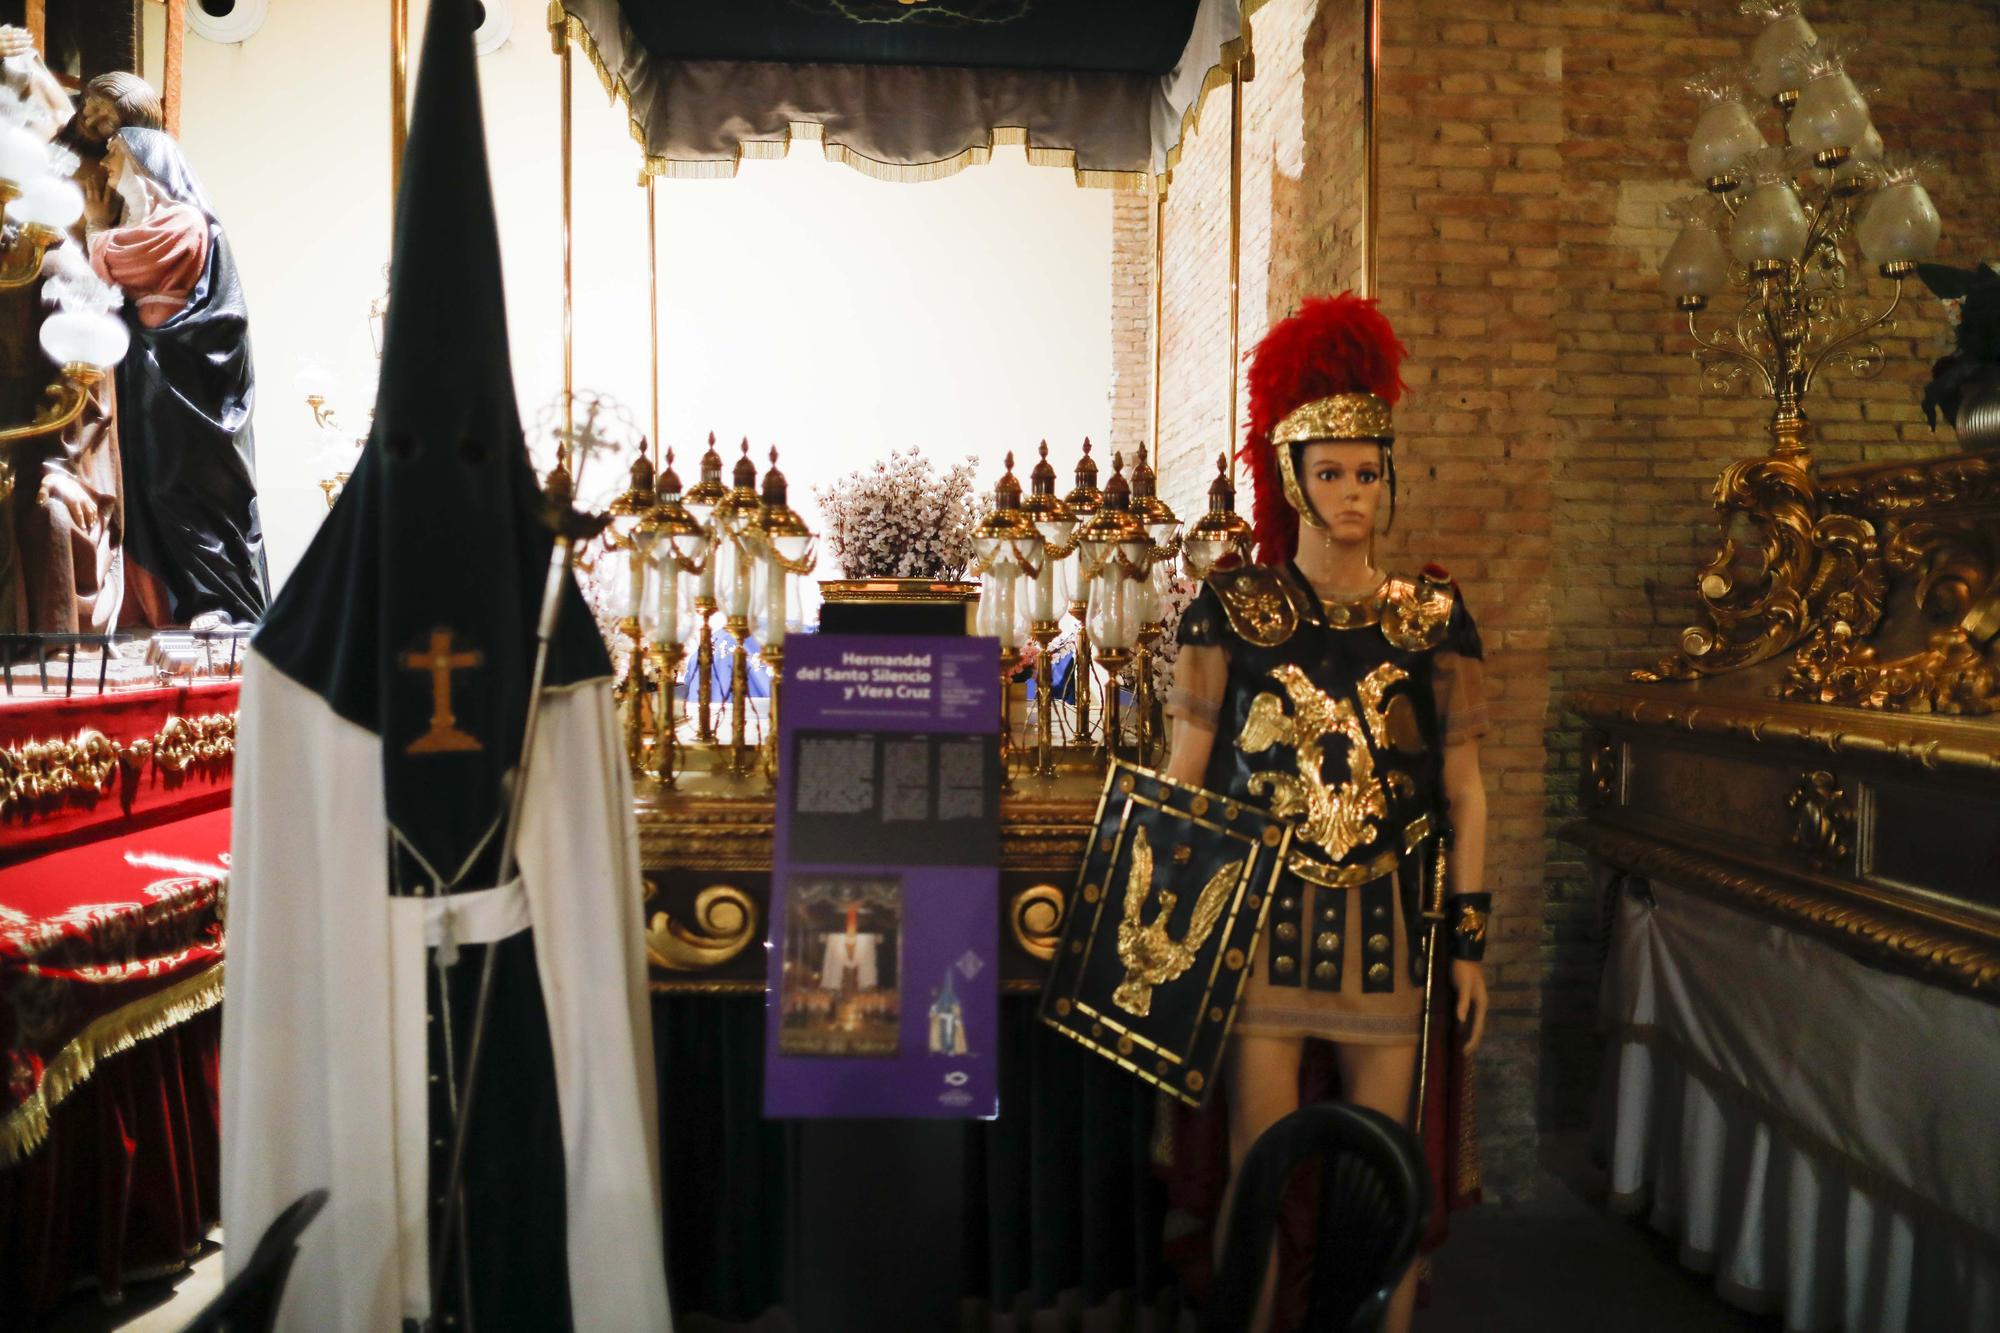 Semana Santa Marinera: Una visita al museo